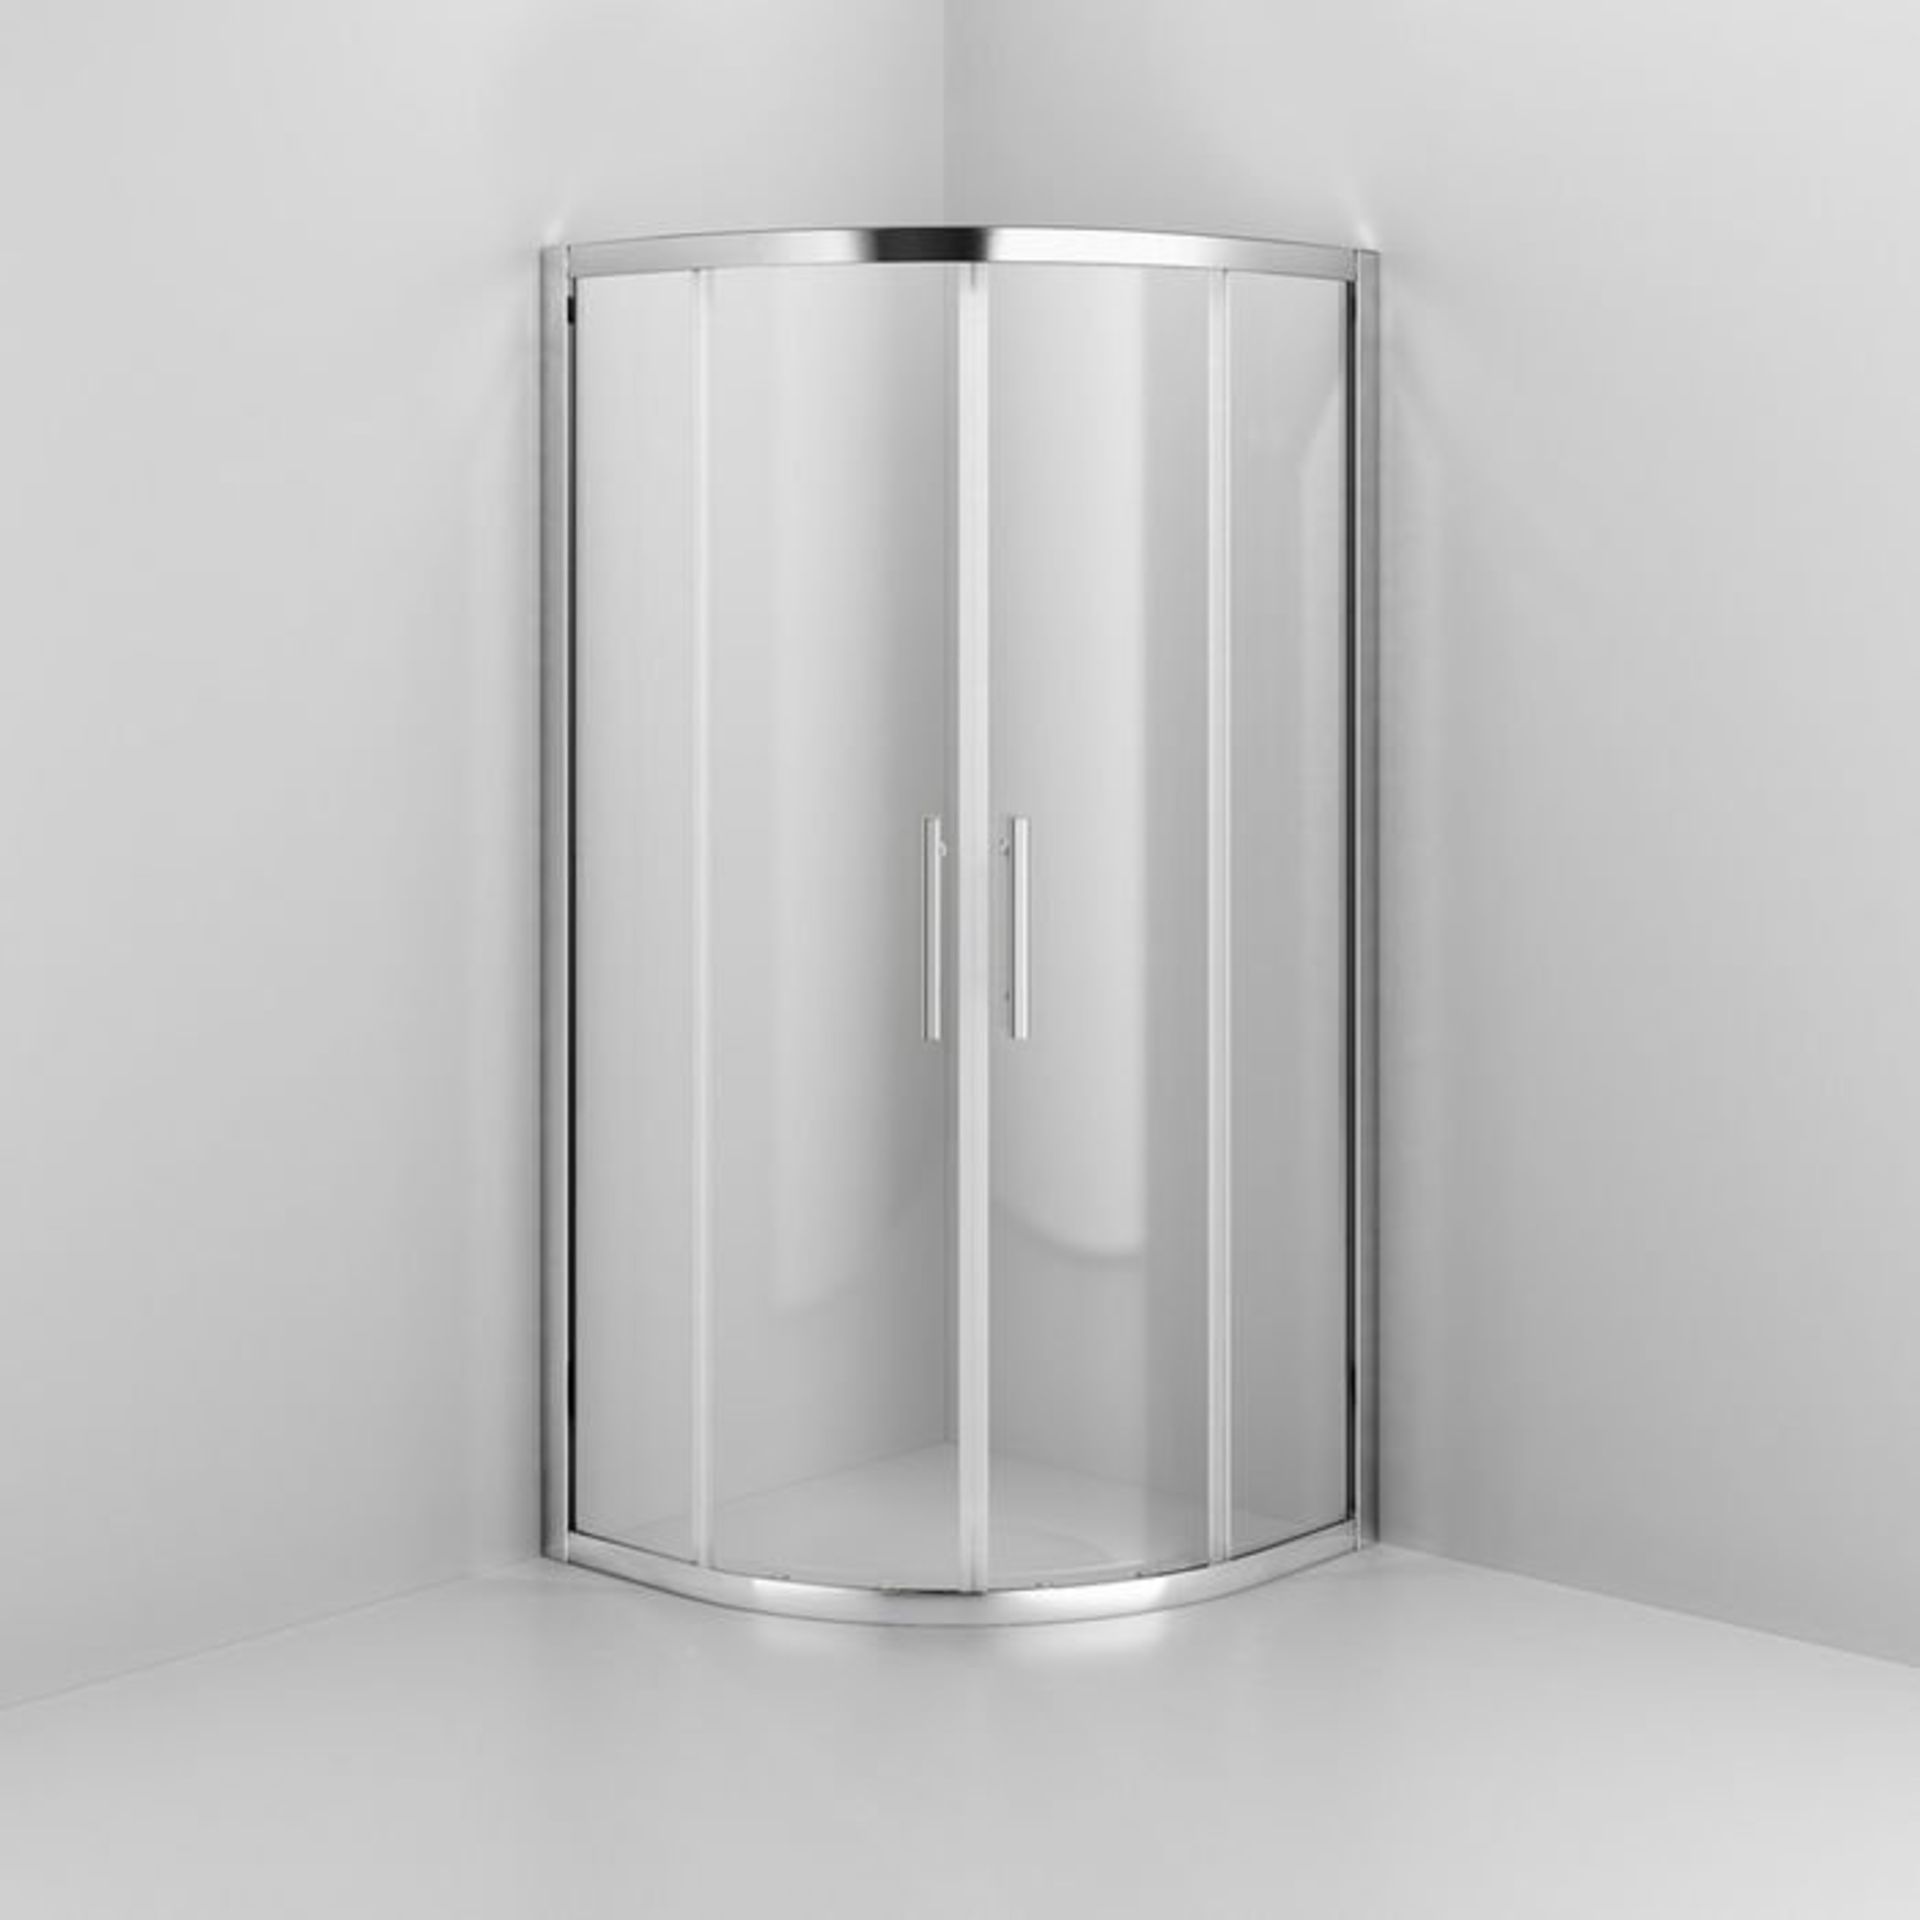 (M5) 900x900mm - 8mm - Premium EasyClean Quadrant Shower Enclosure. RRP £398.99. 8mm EasyClean glass - Image 5 of 6